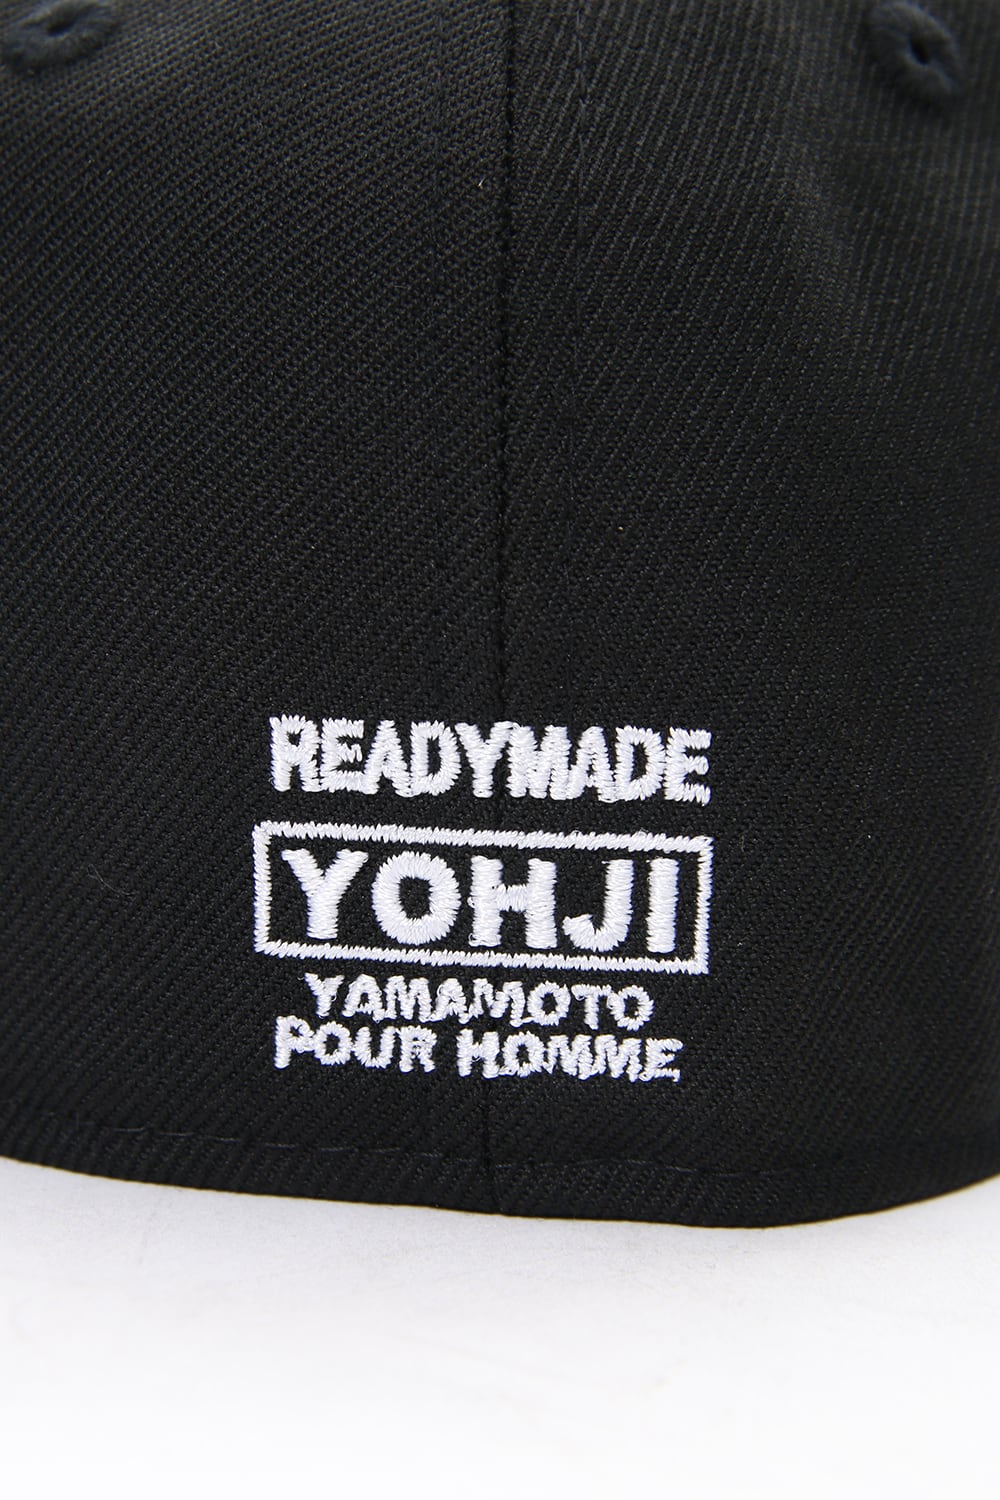 NEW ERA x READYMADE x Yohji Yamamoto  59 FIFTY "Y" Logo Black